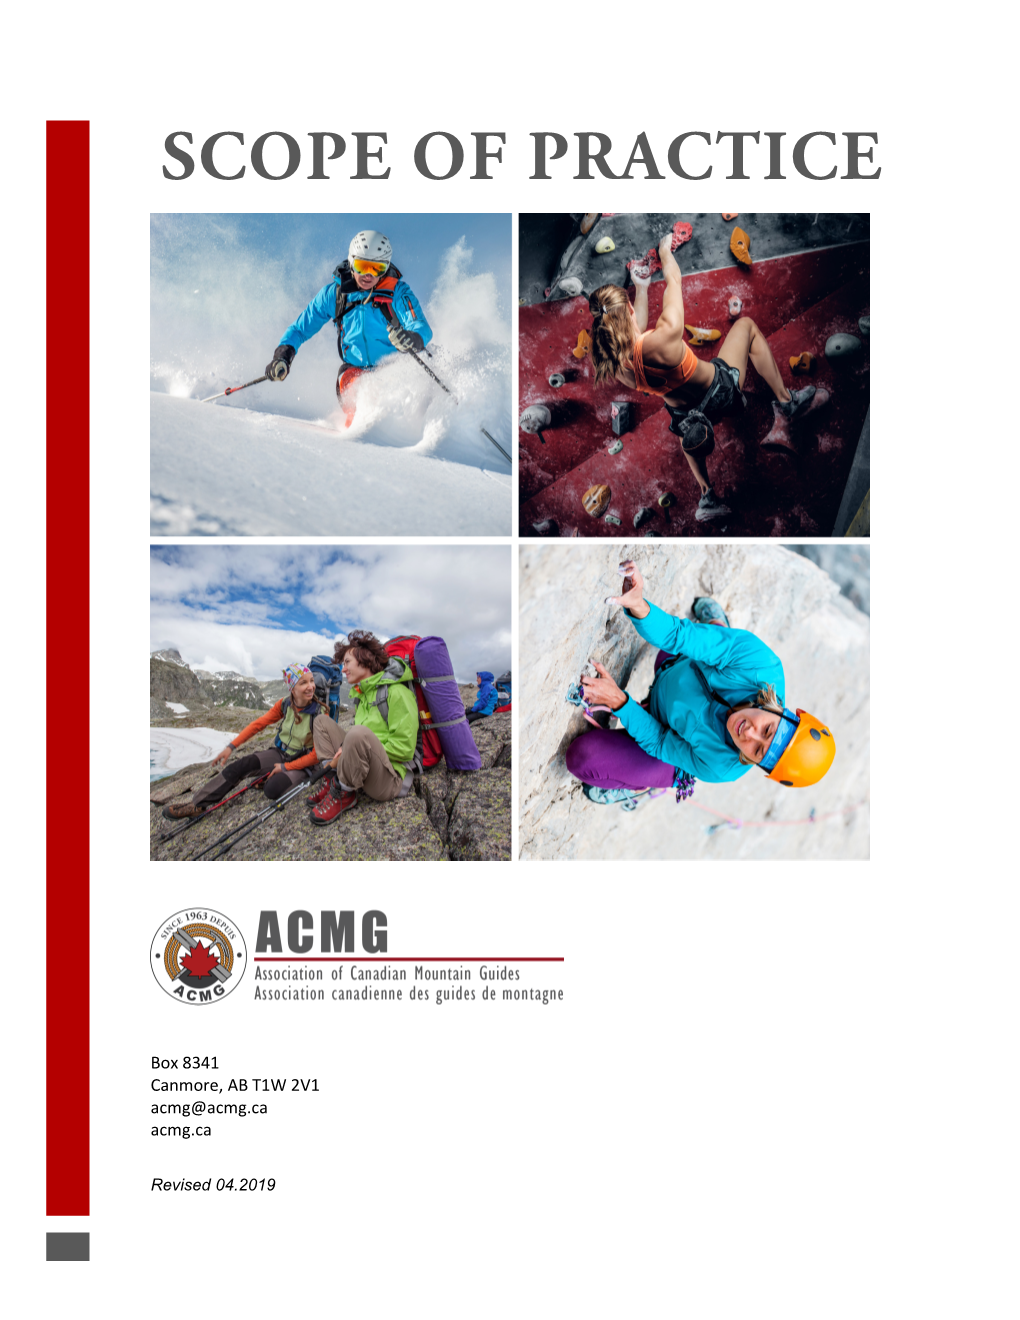 ACMG Scope of Practice